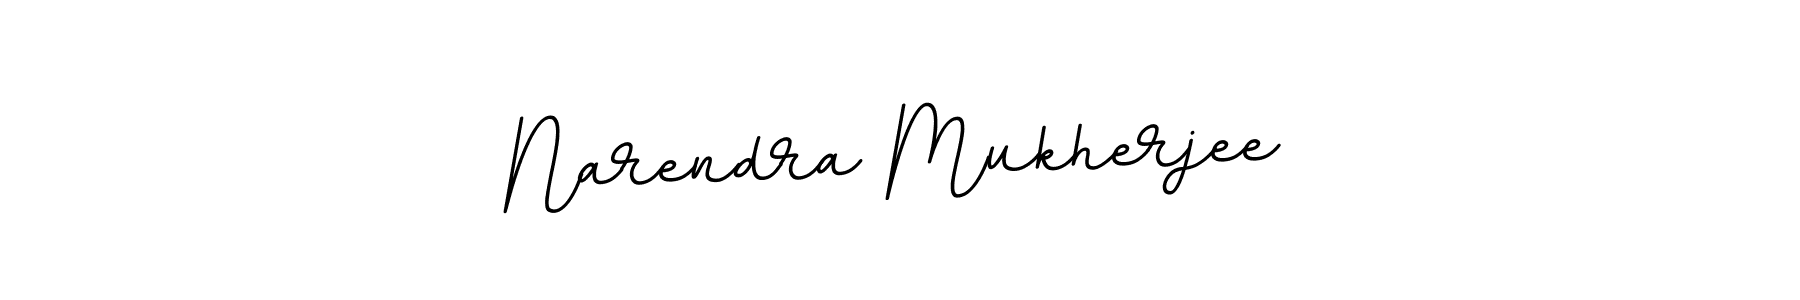 How to Draw Narendra Mukherjee signature style? BallpointsItalic-DORy9 is a latest design signature styles for name Narendra Mukherjee. Narendra Mukherjee signature style 11 images and pictures png